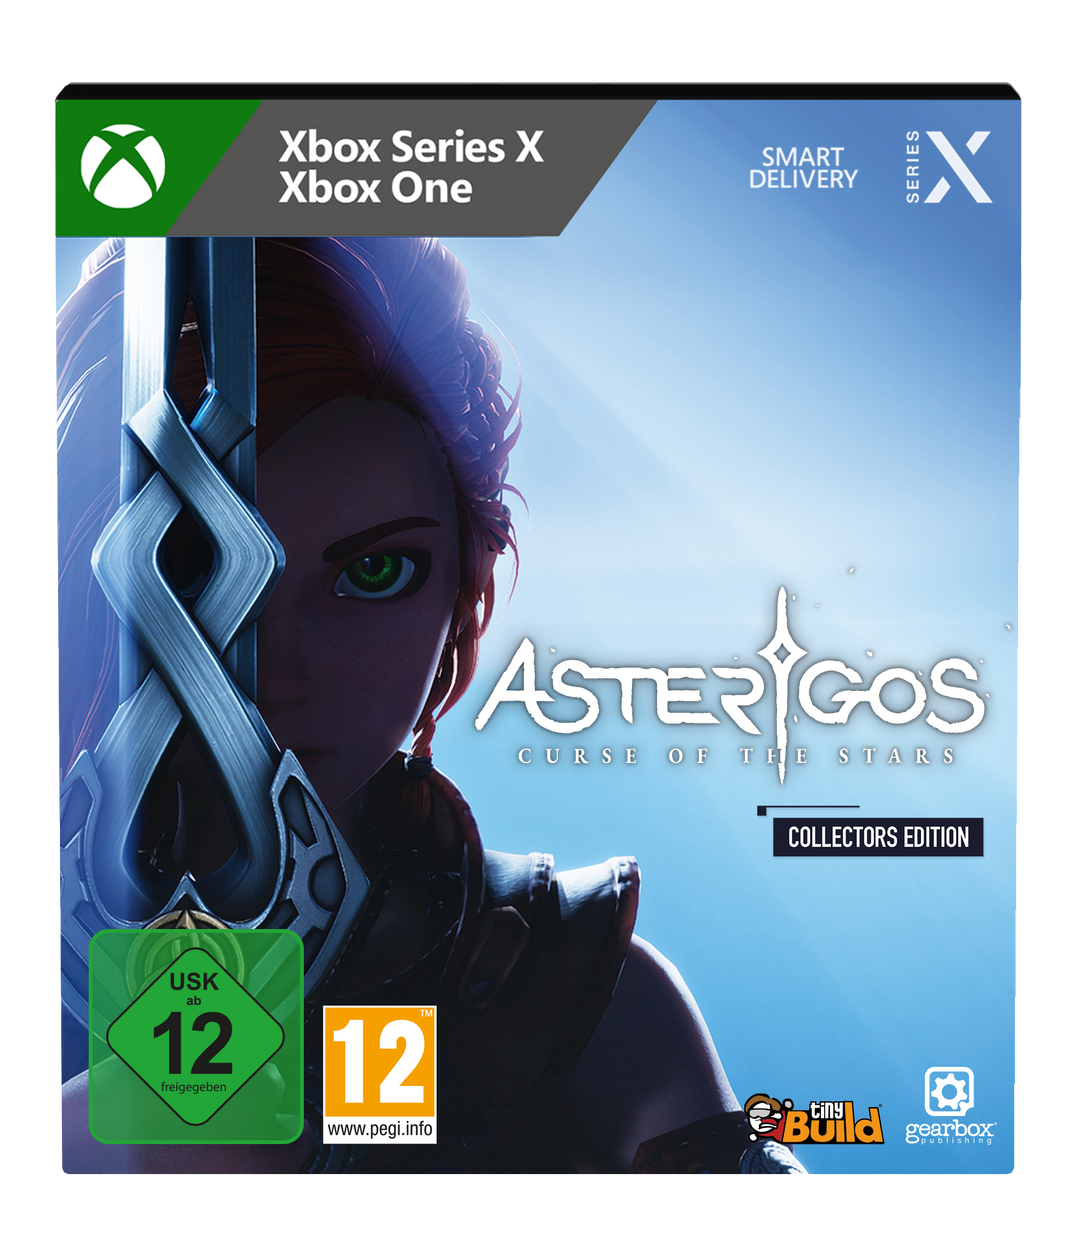 Asterigos: Curse of the Stars Collectors Edition – Xbox Series